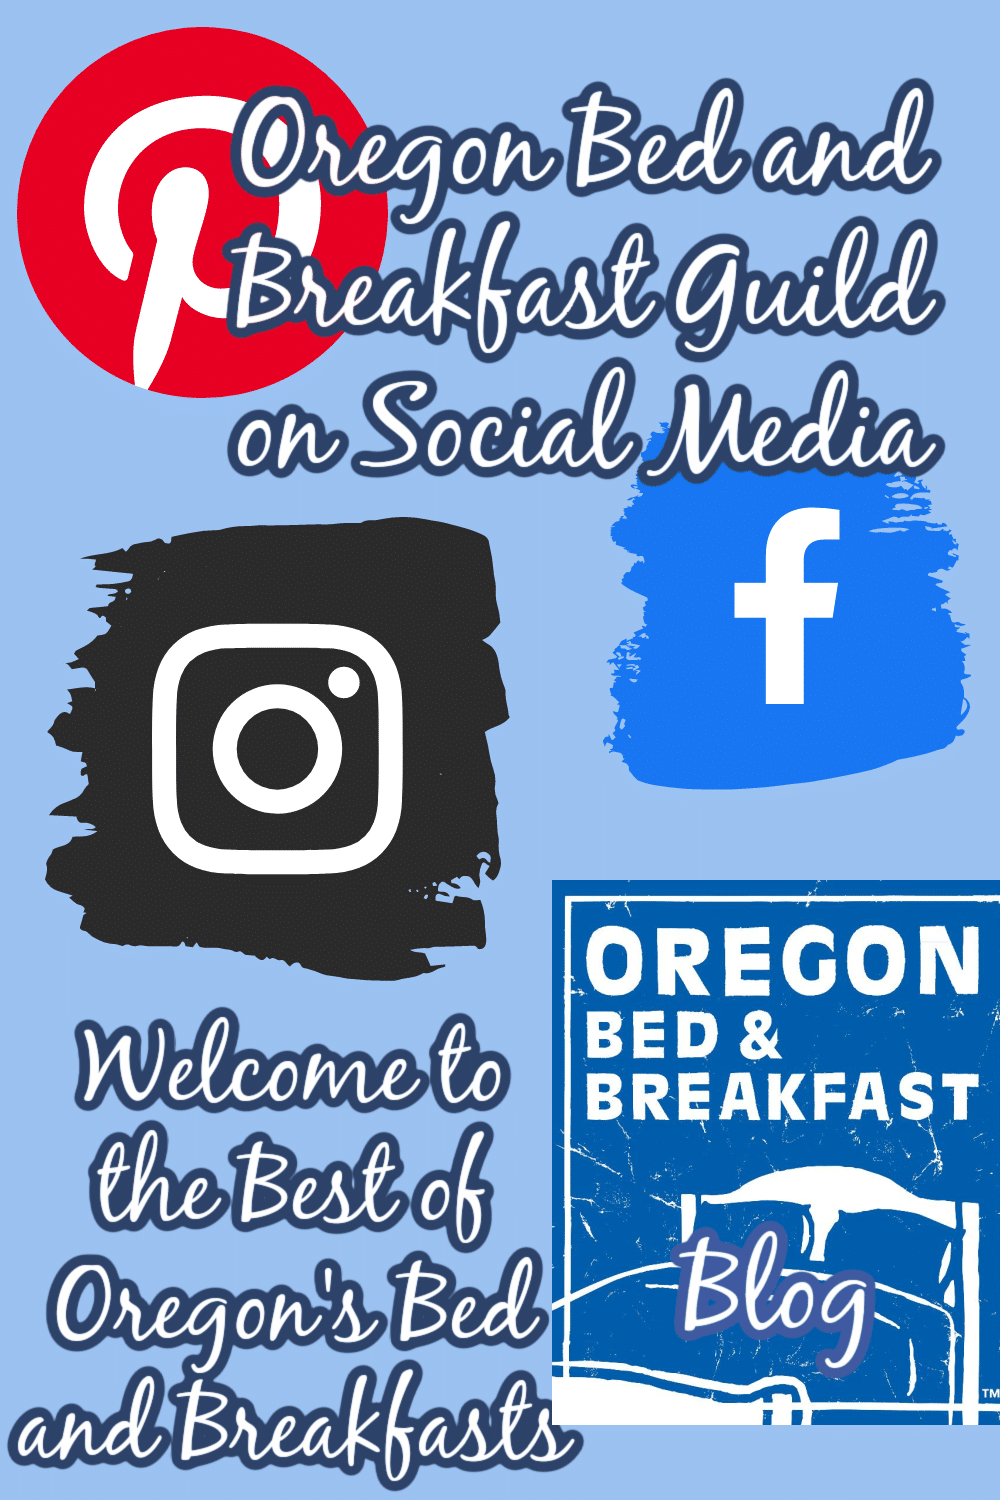 A blue pinterest pin with social media logos and an Oregon Guild logo